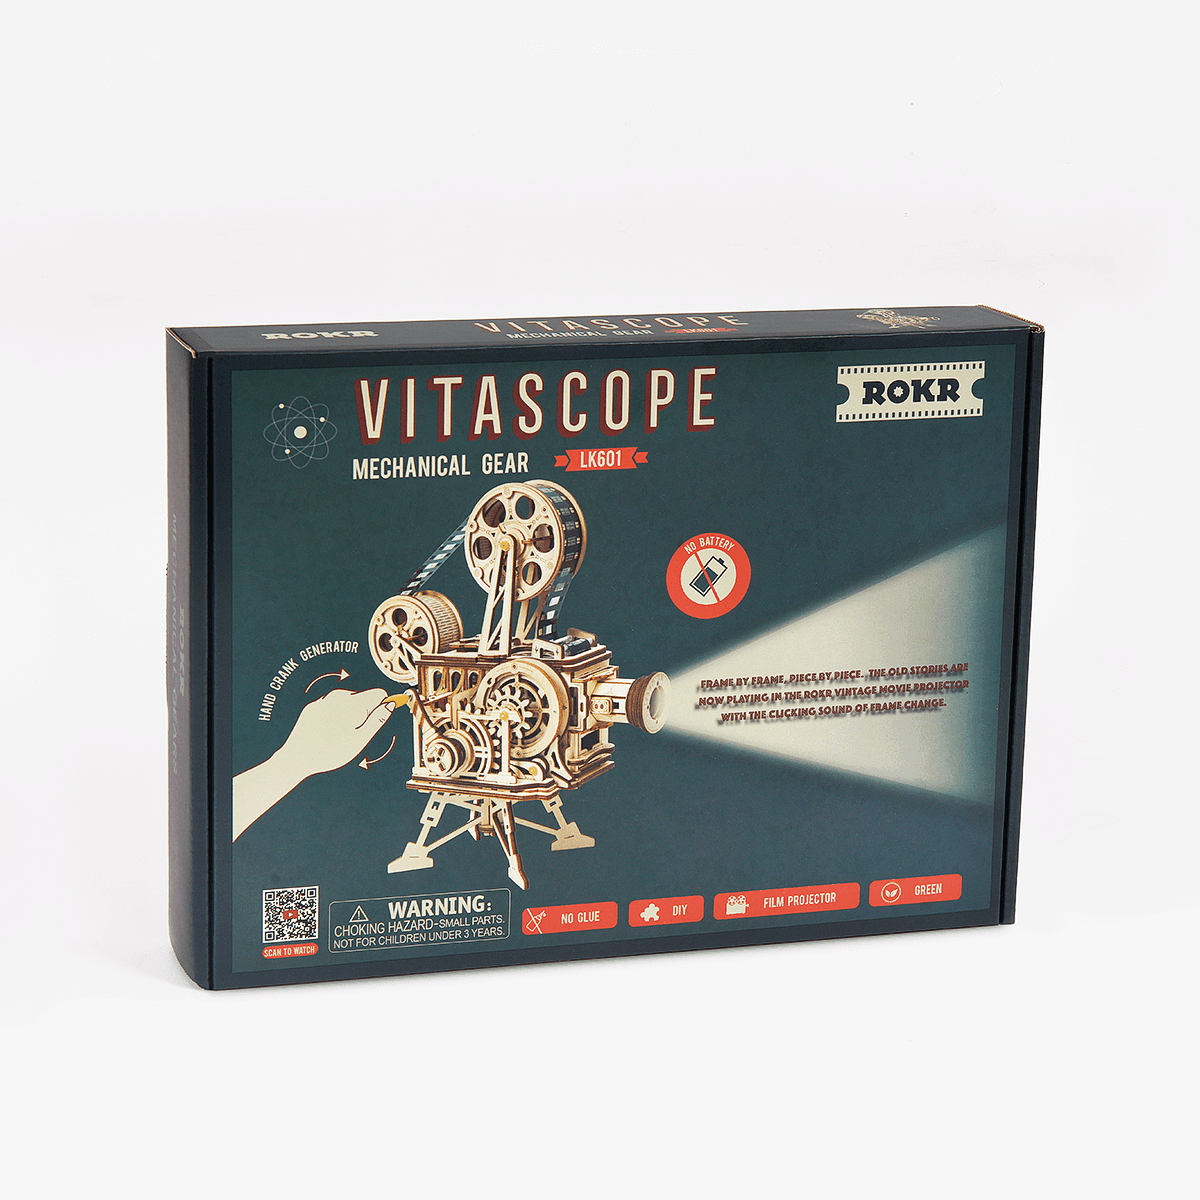 Vitascope - classic film projector - Block Center 